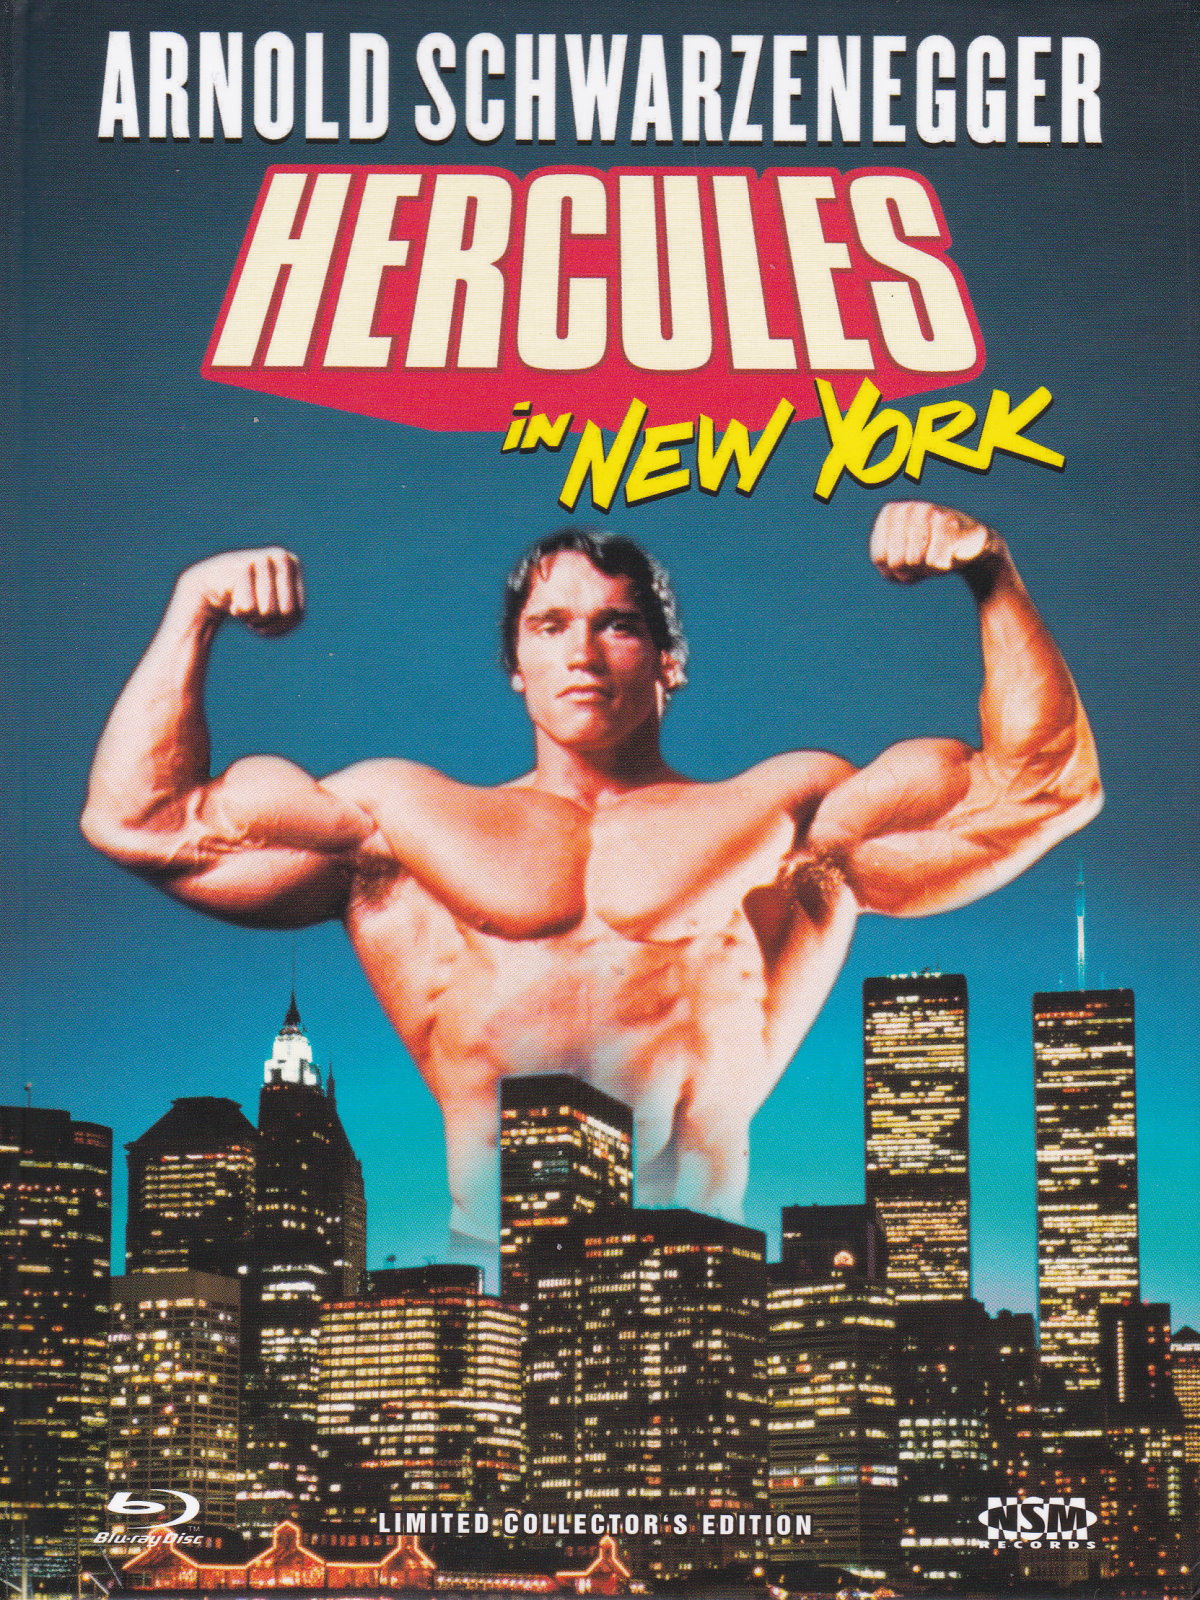 Cover - Herkules in New York.jpg